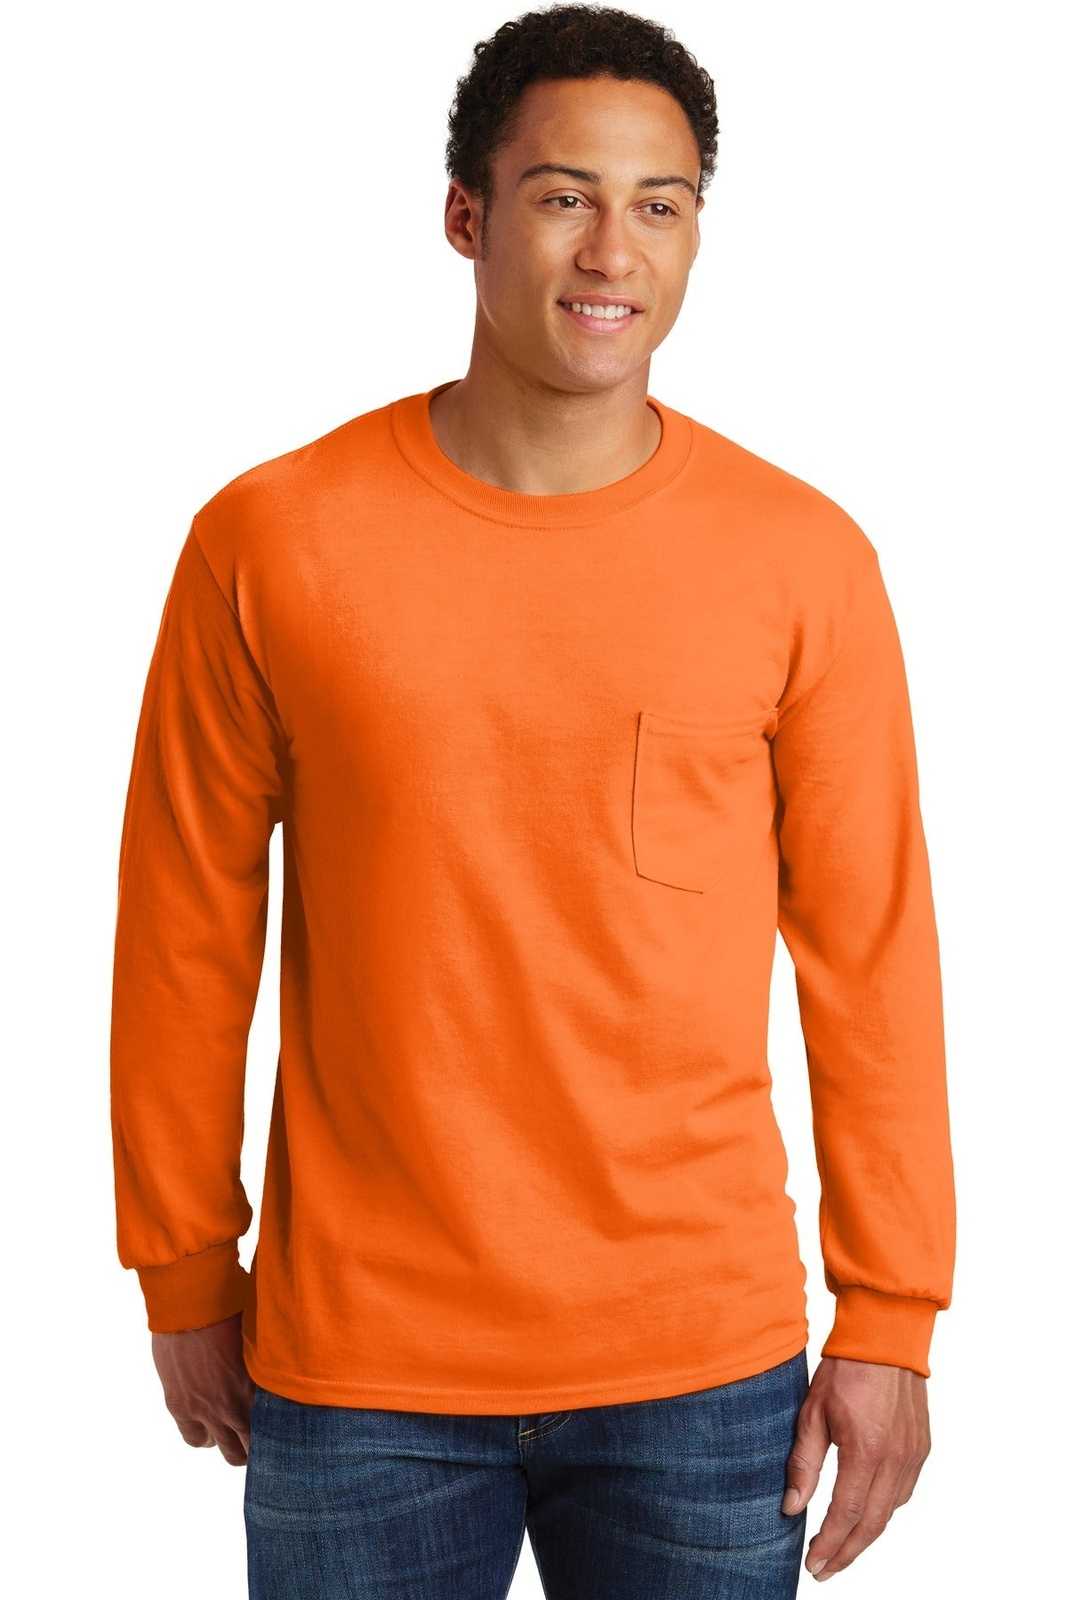 Gildan 2410 Ultra Cotton 100% Cotton Long Sleeve T-Shirt with Pocket - S. Orange - HIT a Double